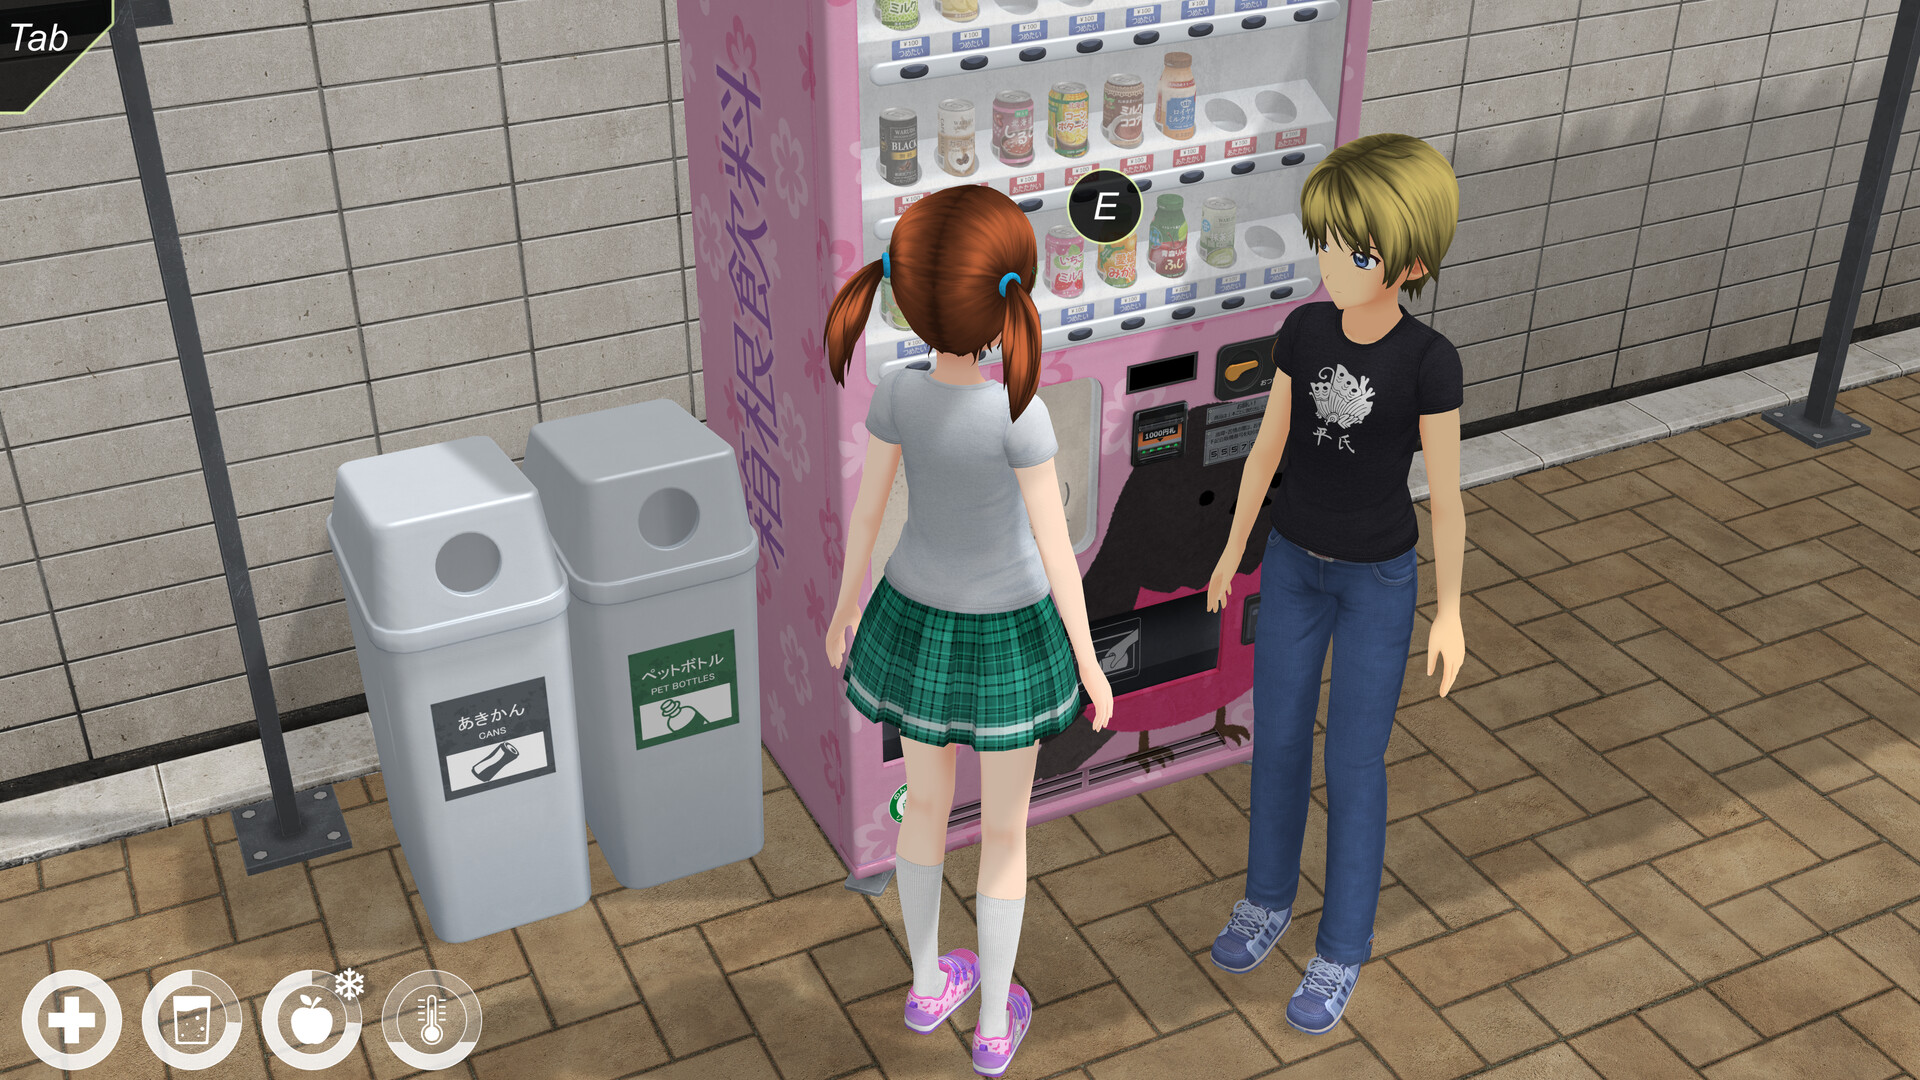 Anime Girl Fashion Make Up  arcade game, best free online games